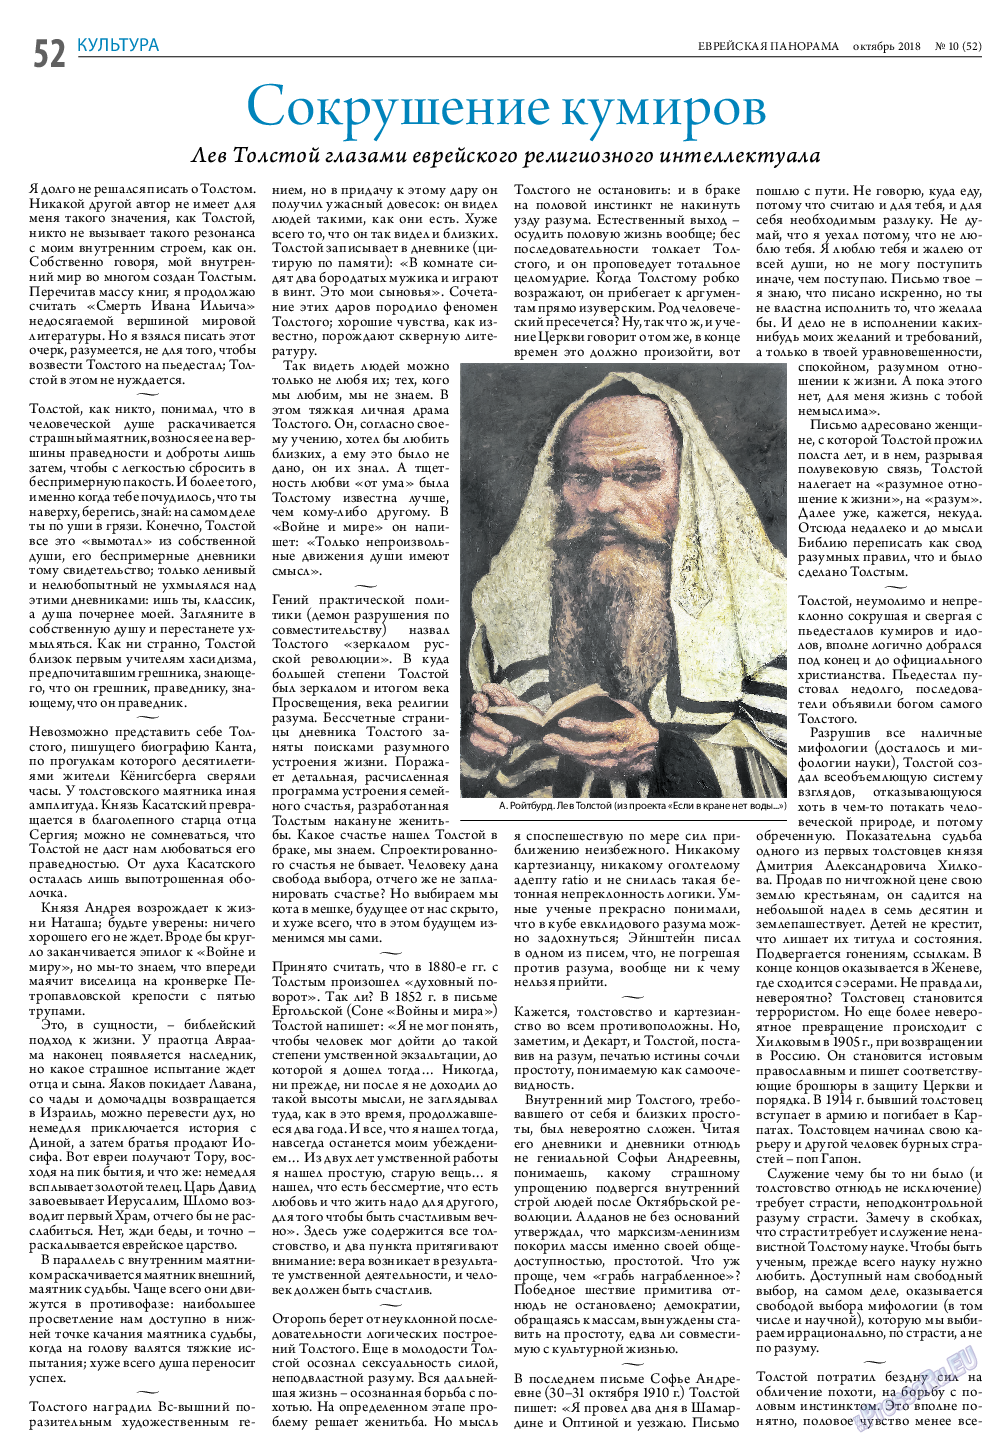 Еврейская панорама, газета. 2018 №10 стр.52